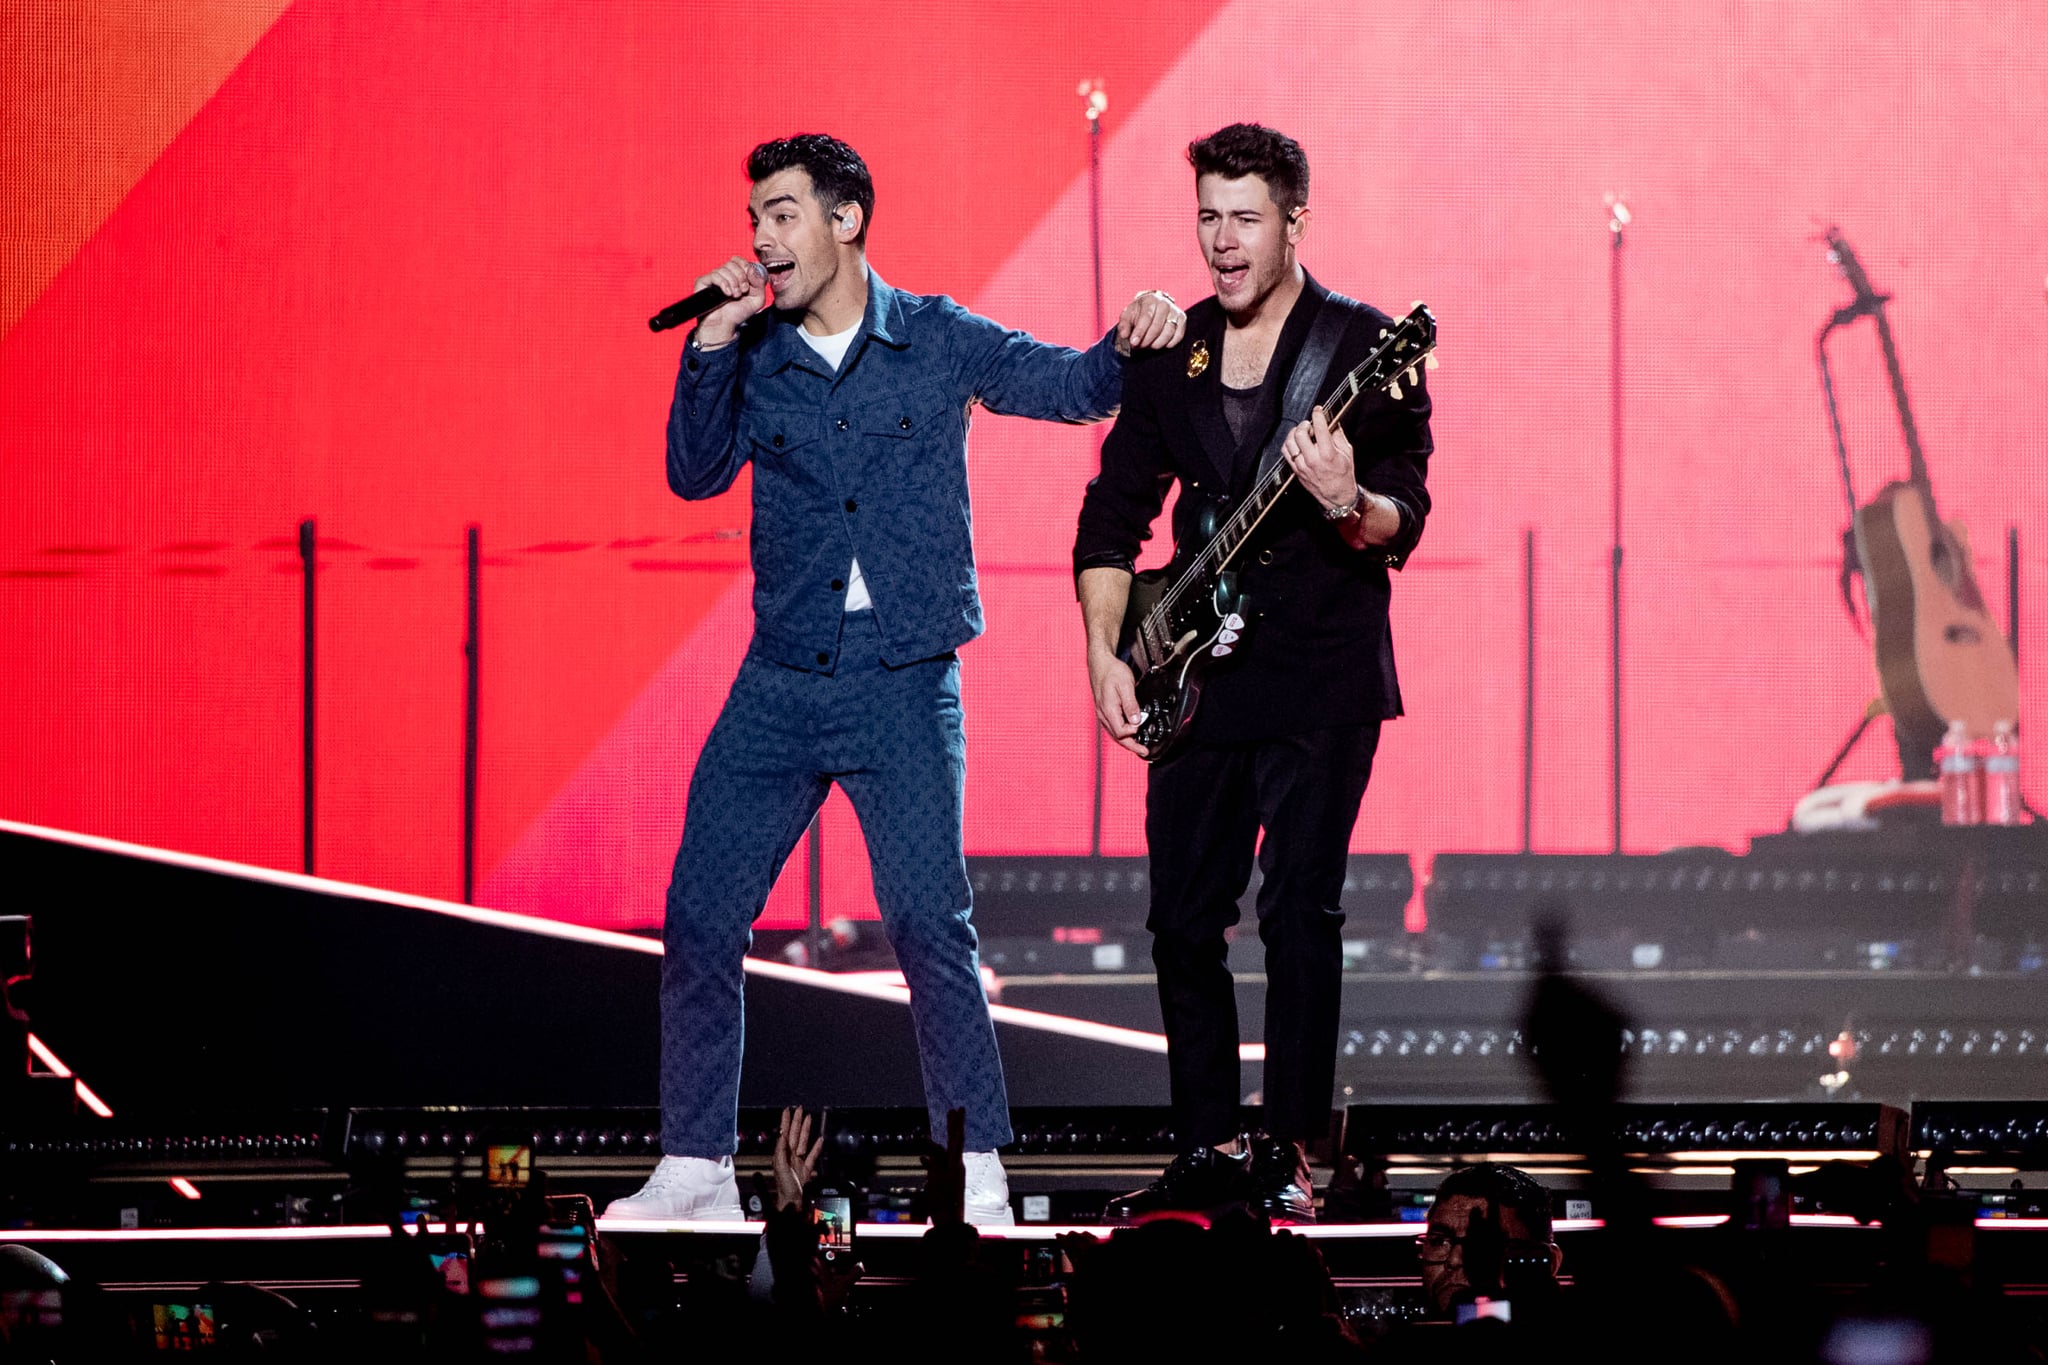 INGLEWOOD, CALIFORNIA - DECEMBER 14: Joe Jonas and Nick Jonas perform onstage at